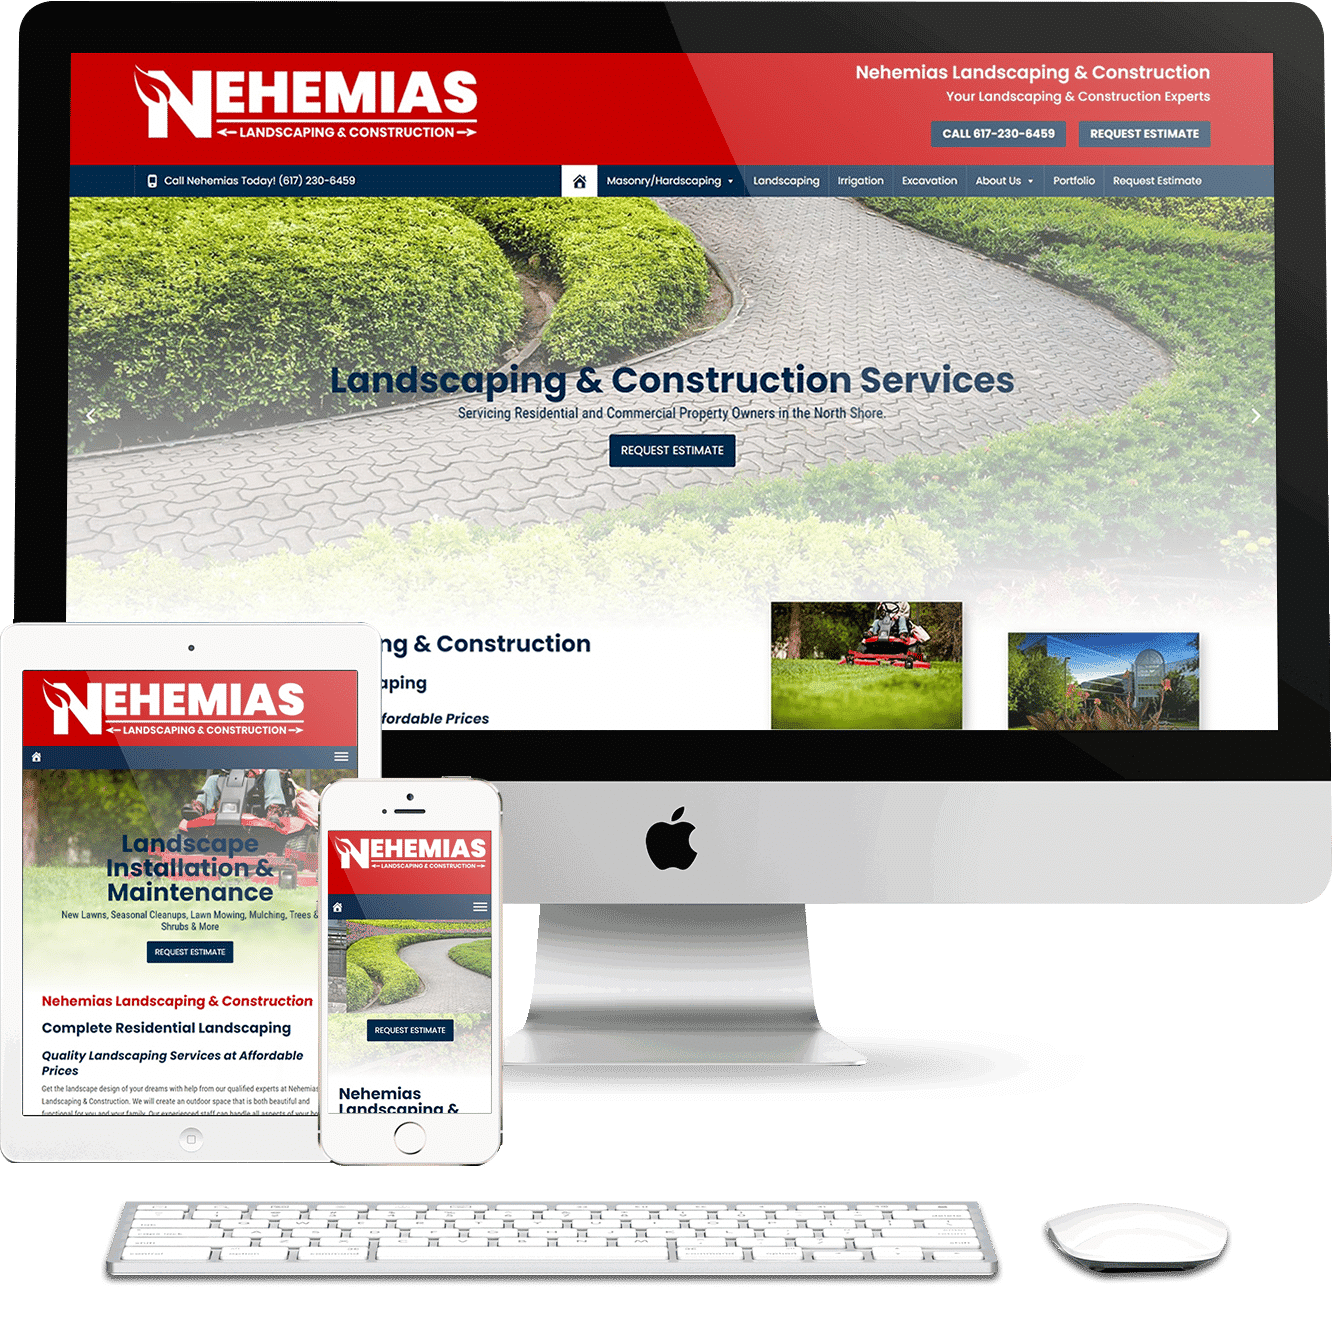 Nehemias Landscaping & Construction